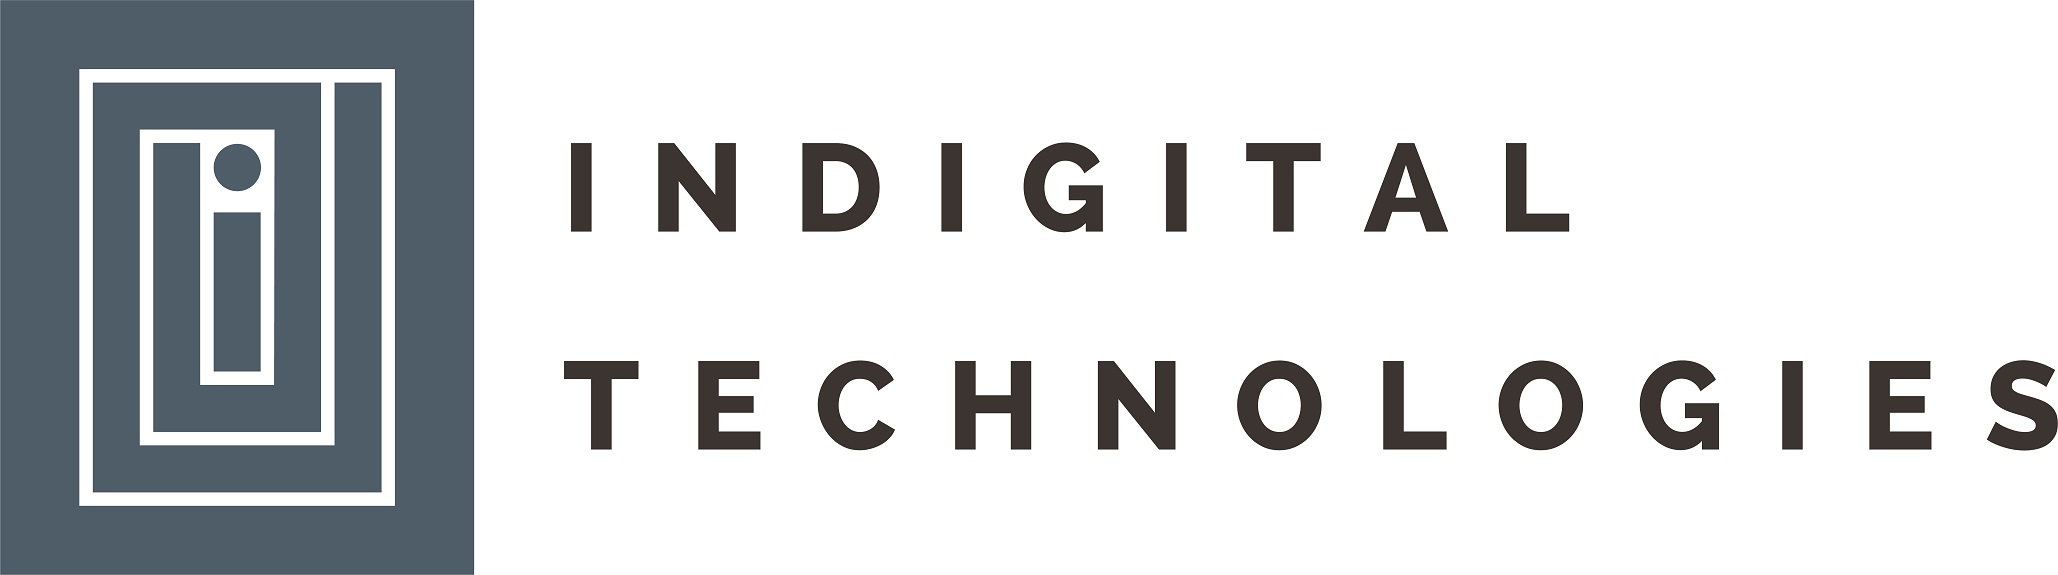 Indigital Logo